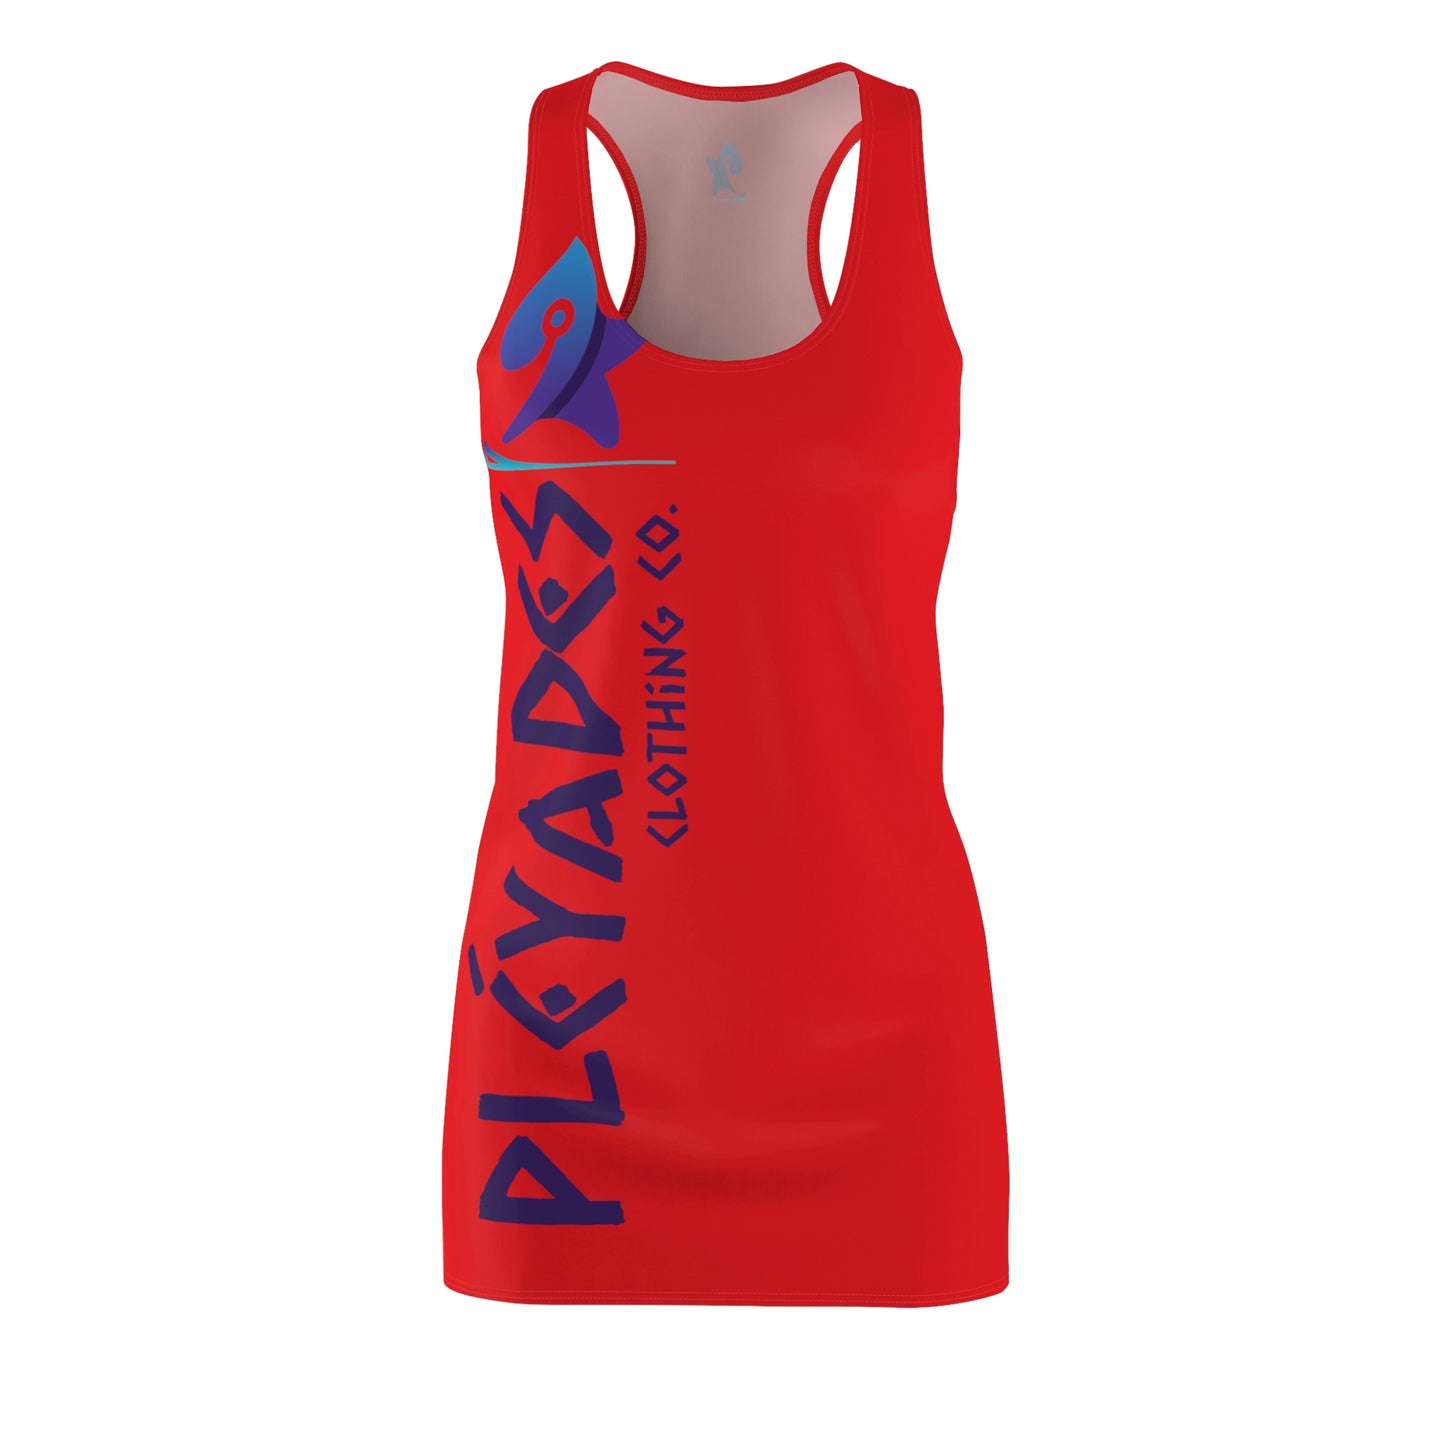 Red Pléyades Women's Cut & Sew Racerback Dress